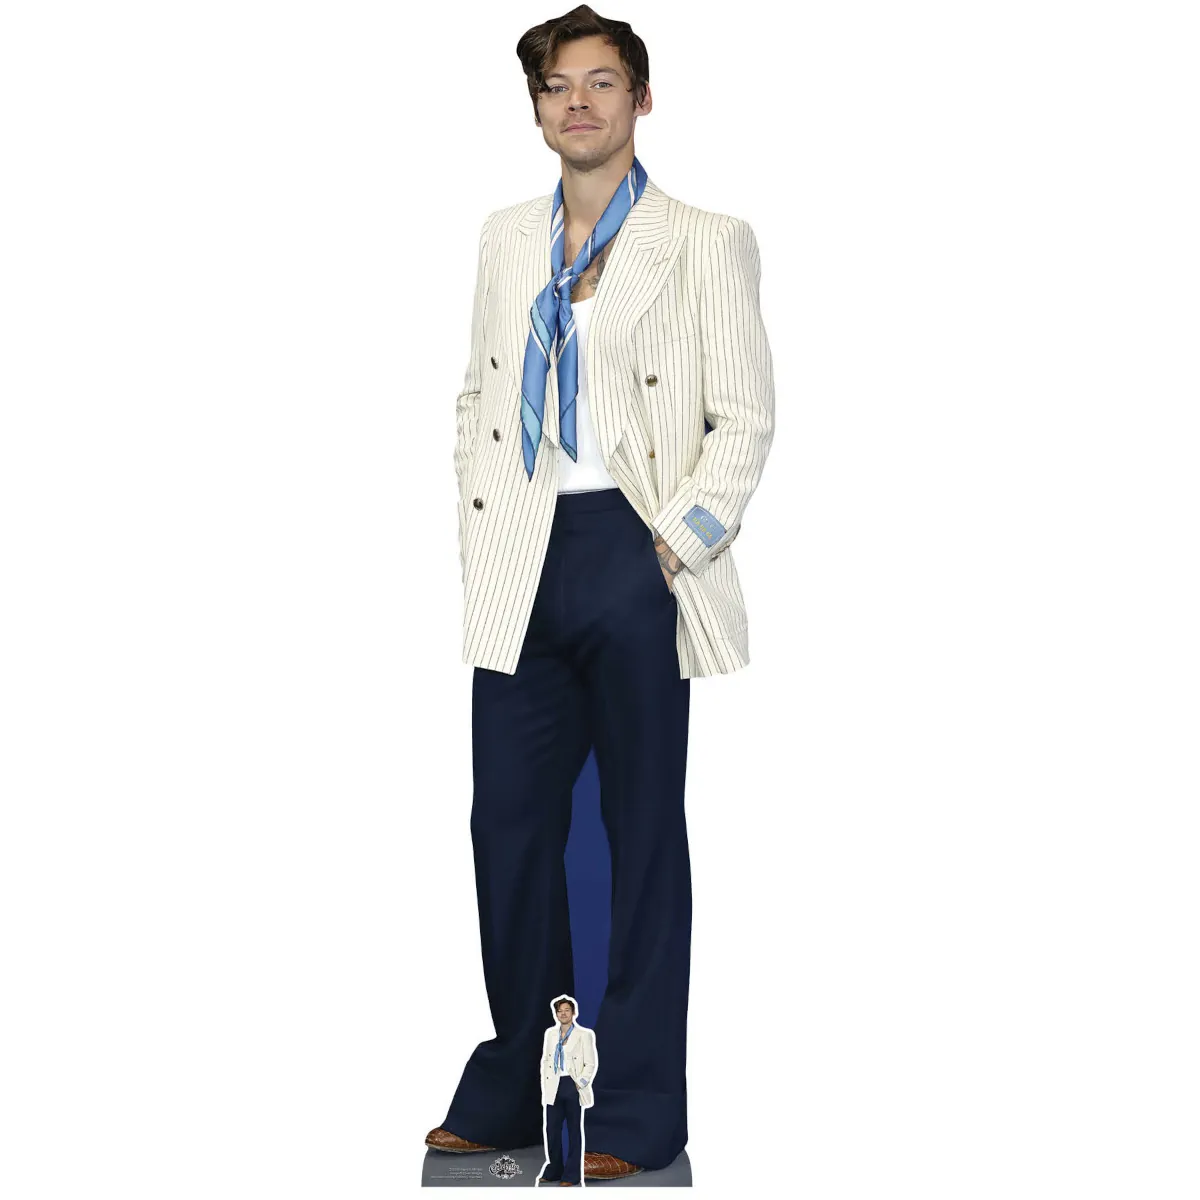 CS1055 Harry Styles 'White Jacket' (English Singer Songwriter) Lifesize + Mini Cardboard Cutout Standee Front